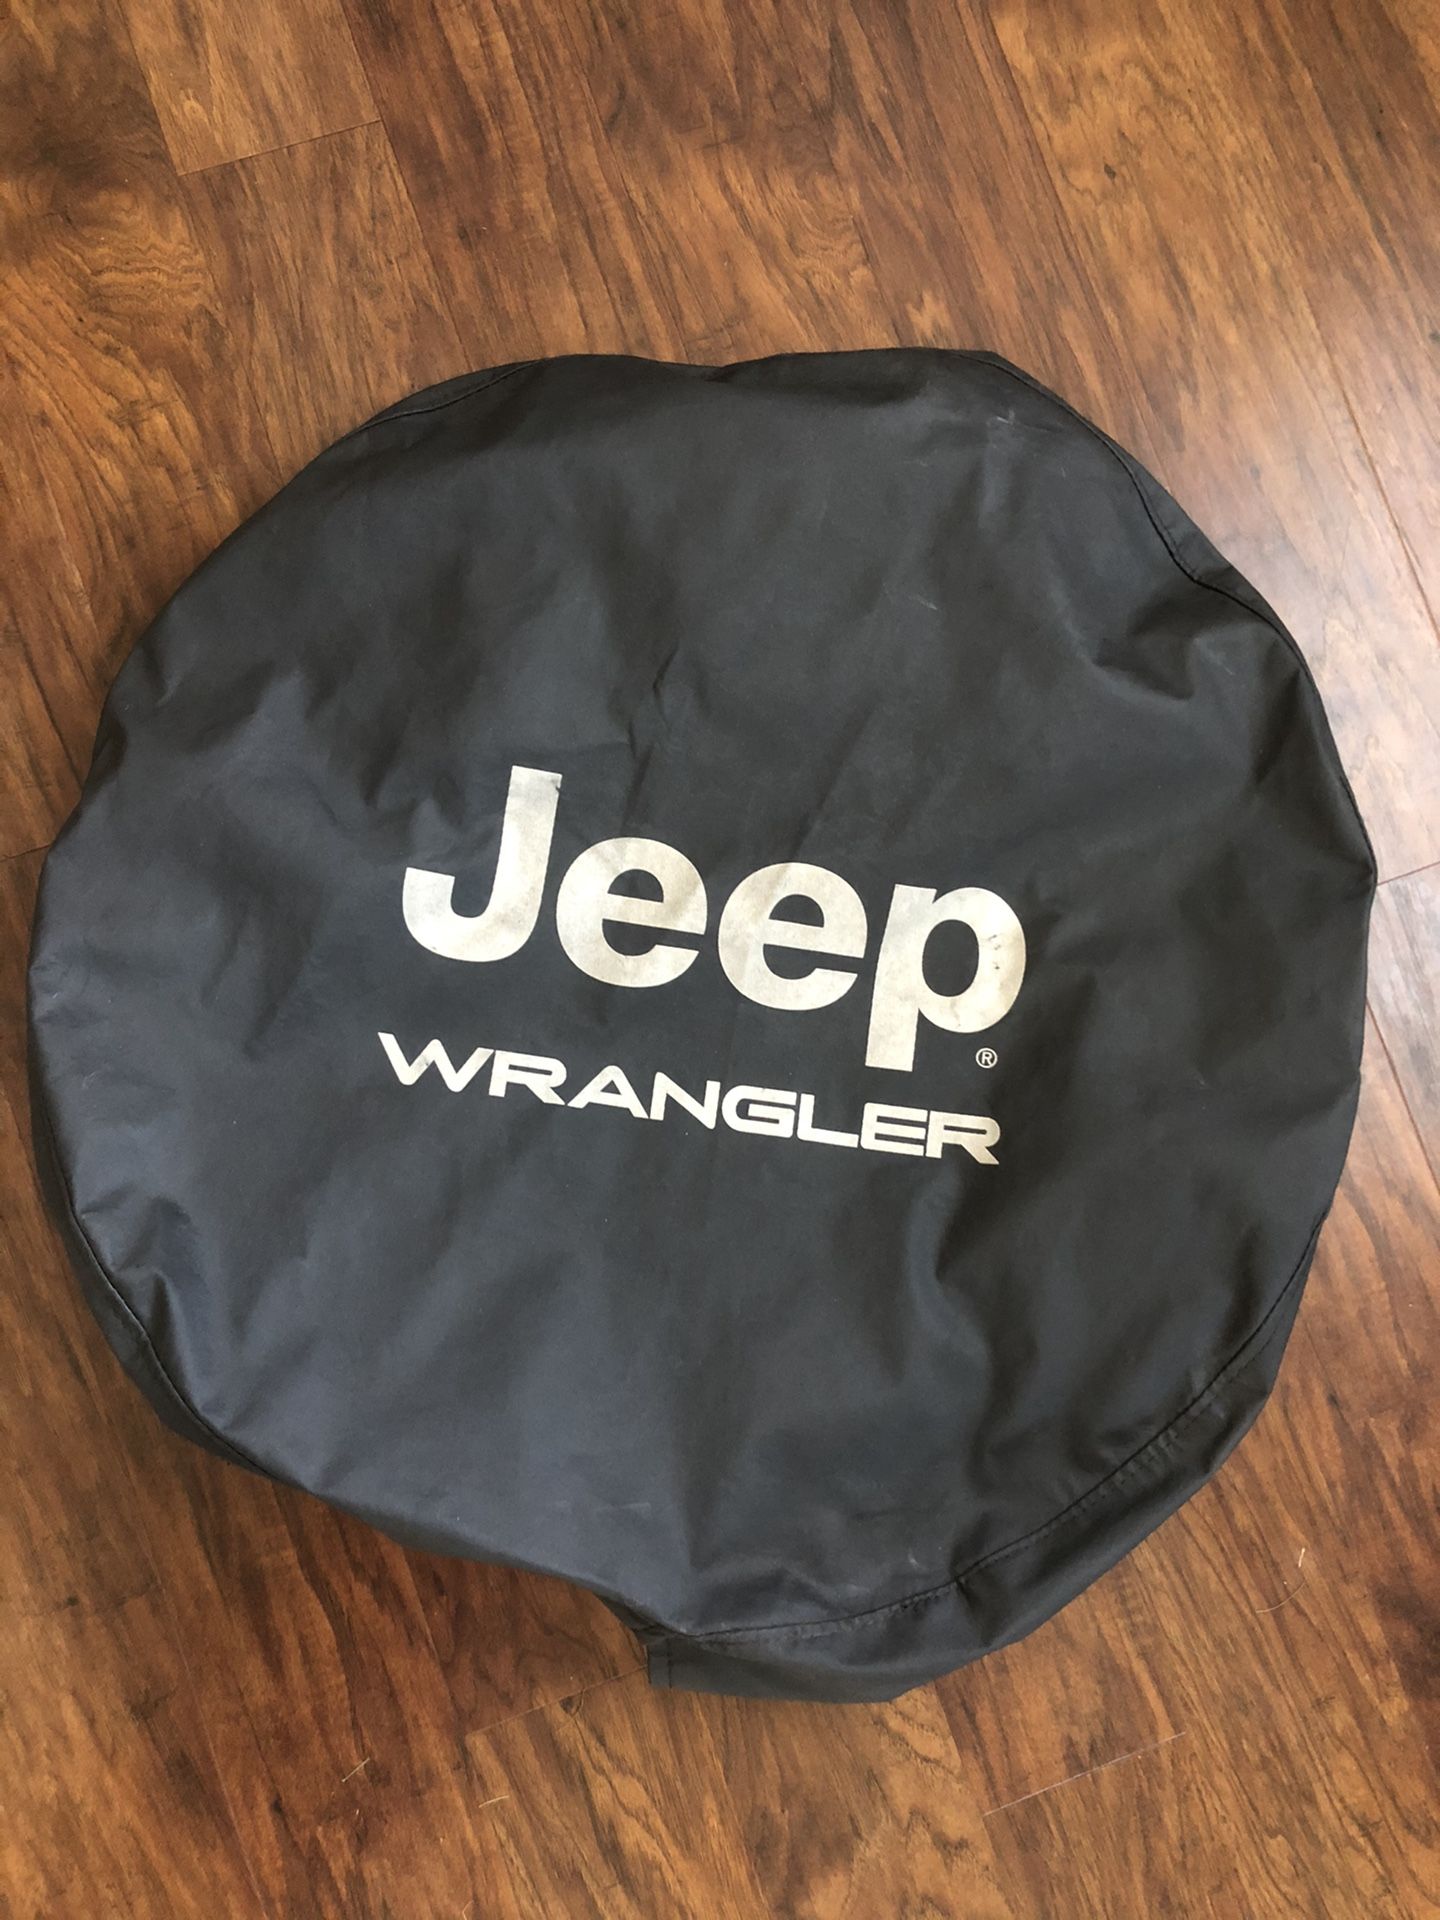 Jeep Wrangler spare tire cover